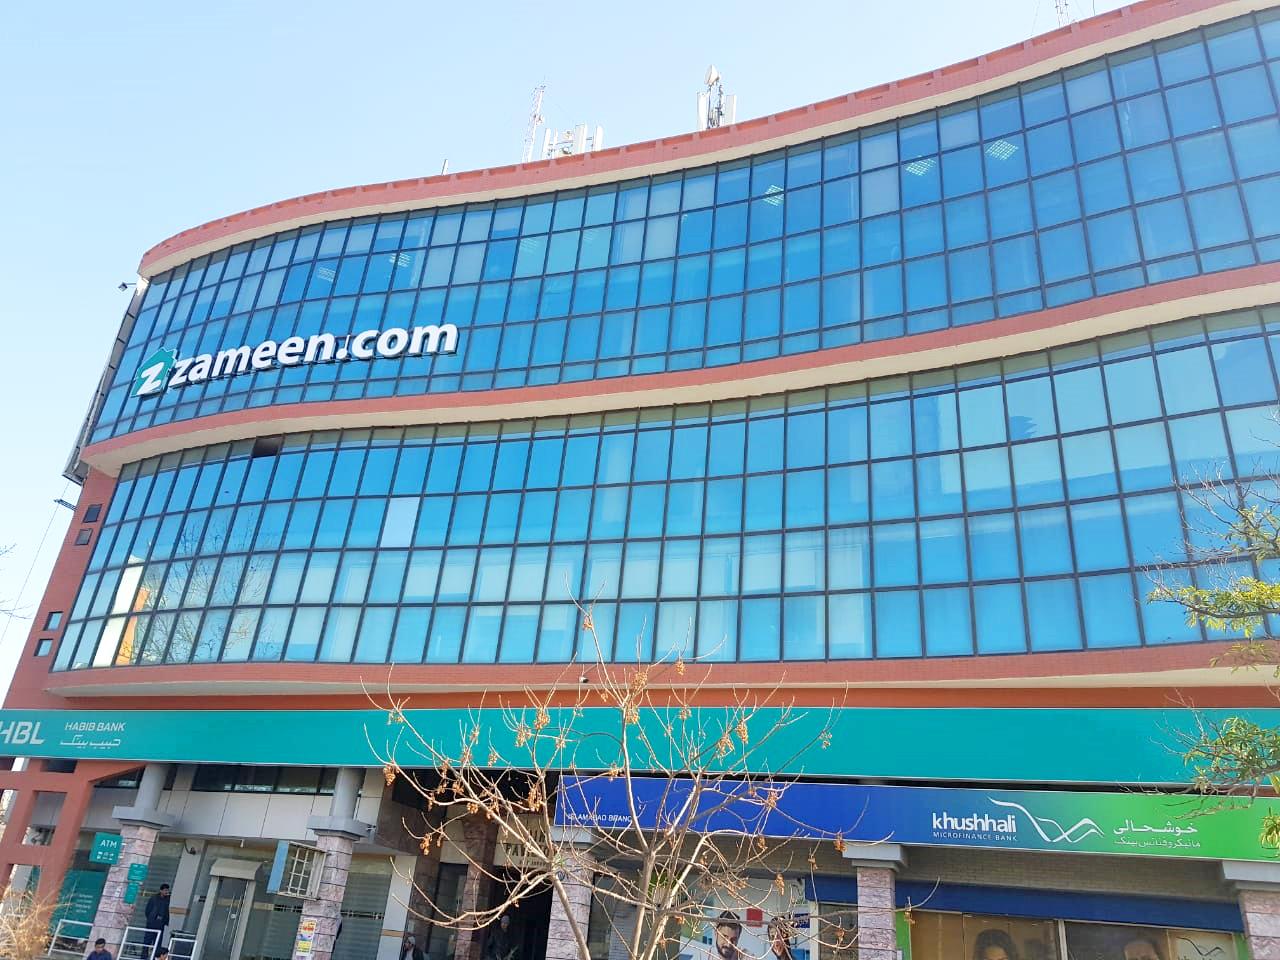 Zameen.com opens major new office in Blue Area, Islamabad